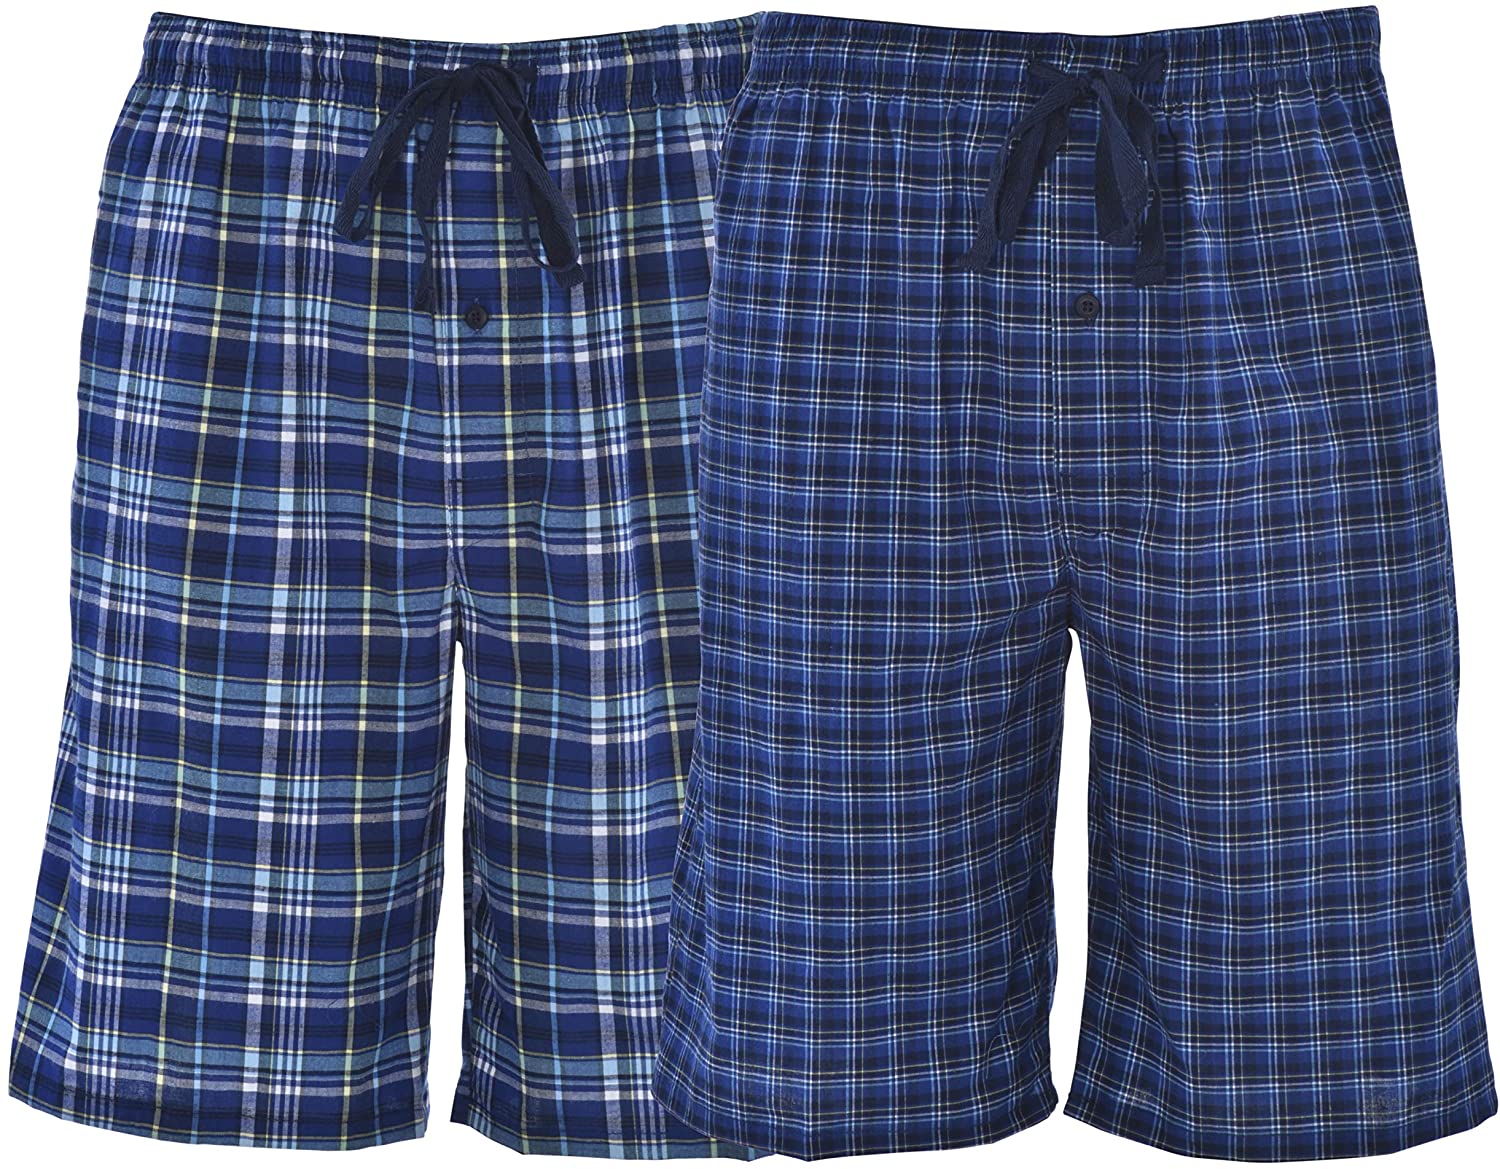 2 Pack Details about   Hanes Men’s & Big Men’s Woven Stretch Pajama Shorts 